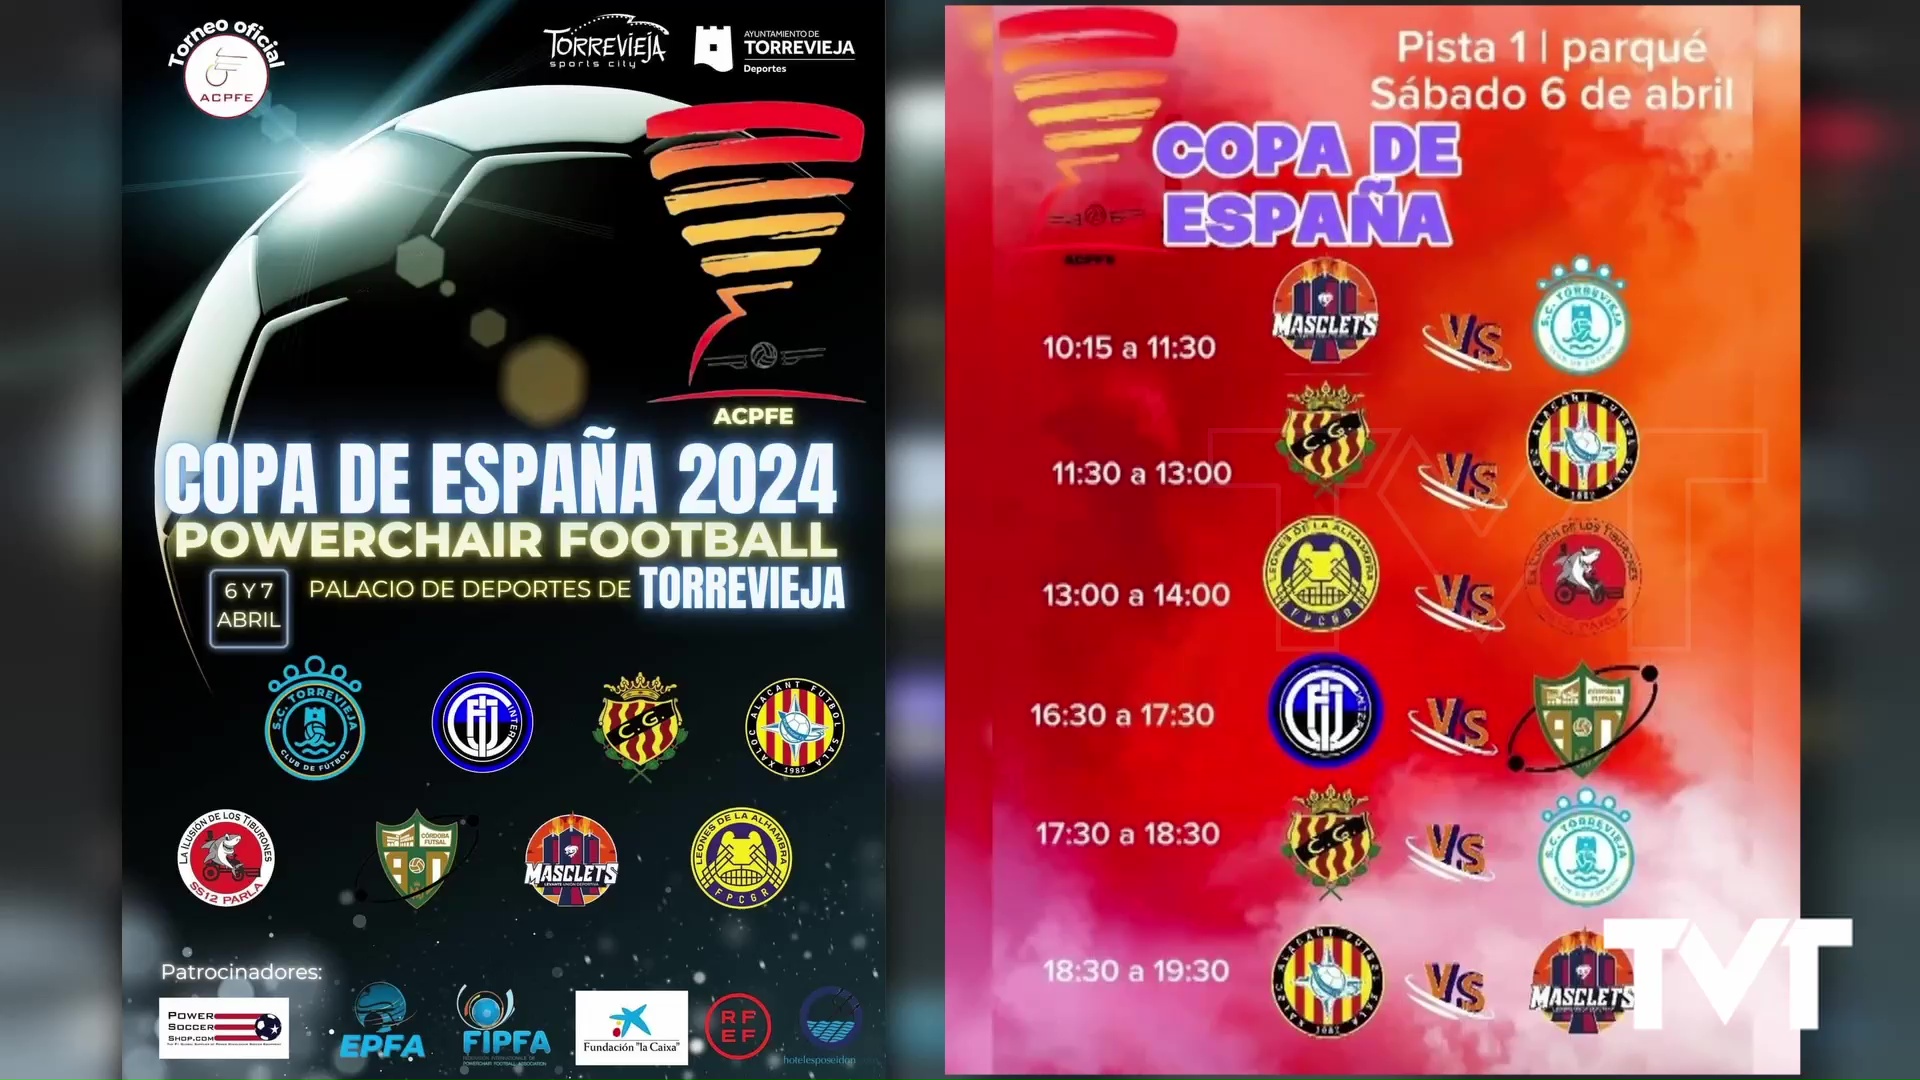 Imagen de Ocho equipos se enfrentarán en Torrevieja en la 3ª Copa de España de PowerChair Football 